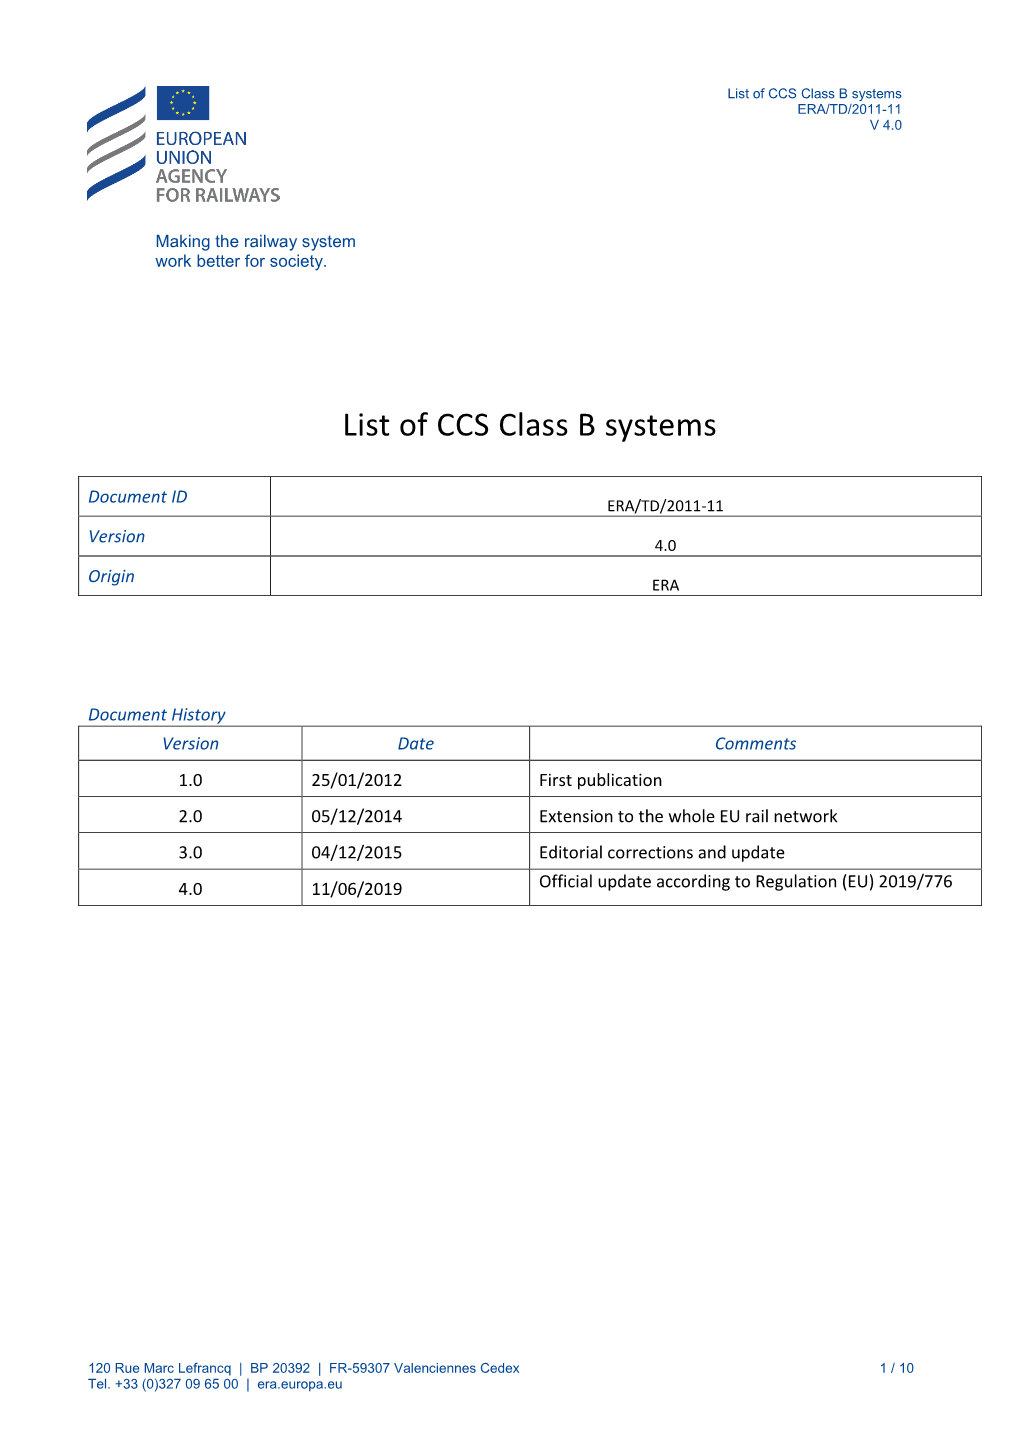 List of CCS Class B Systems ERA/TD/2011-11 V 4.0